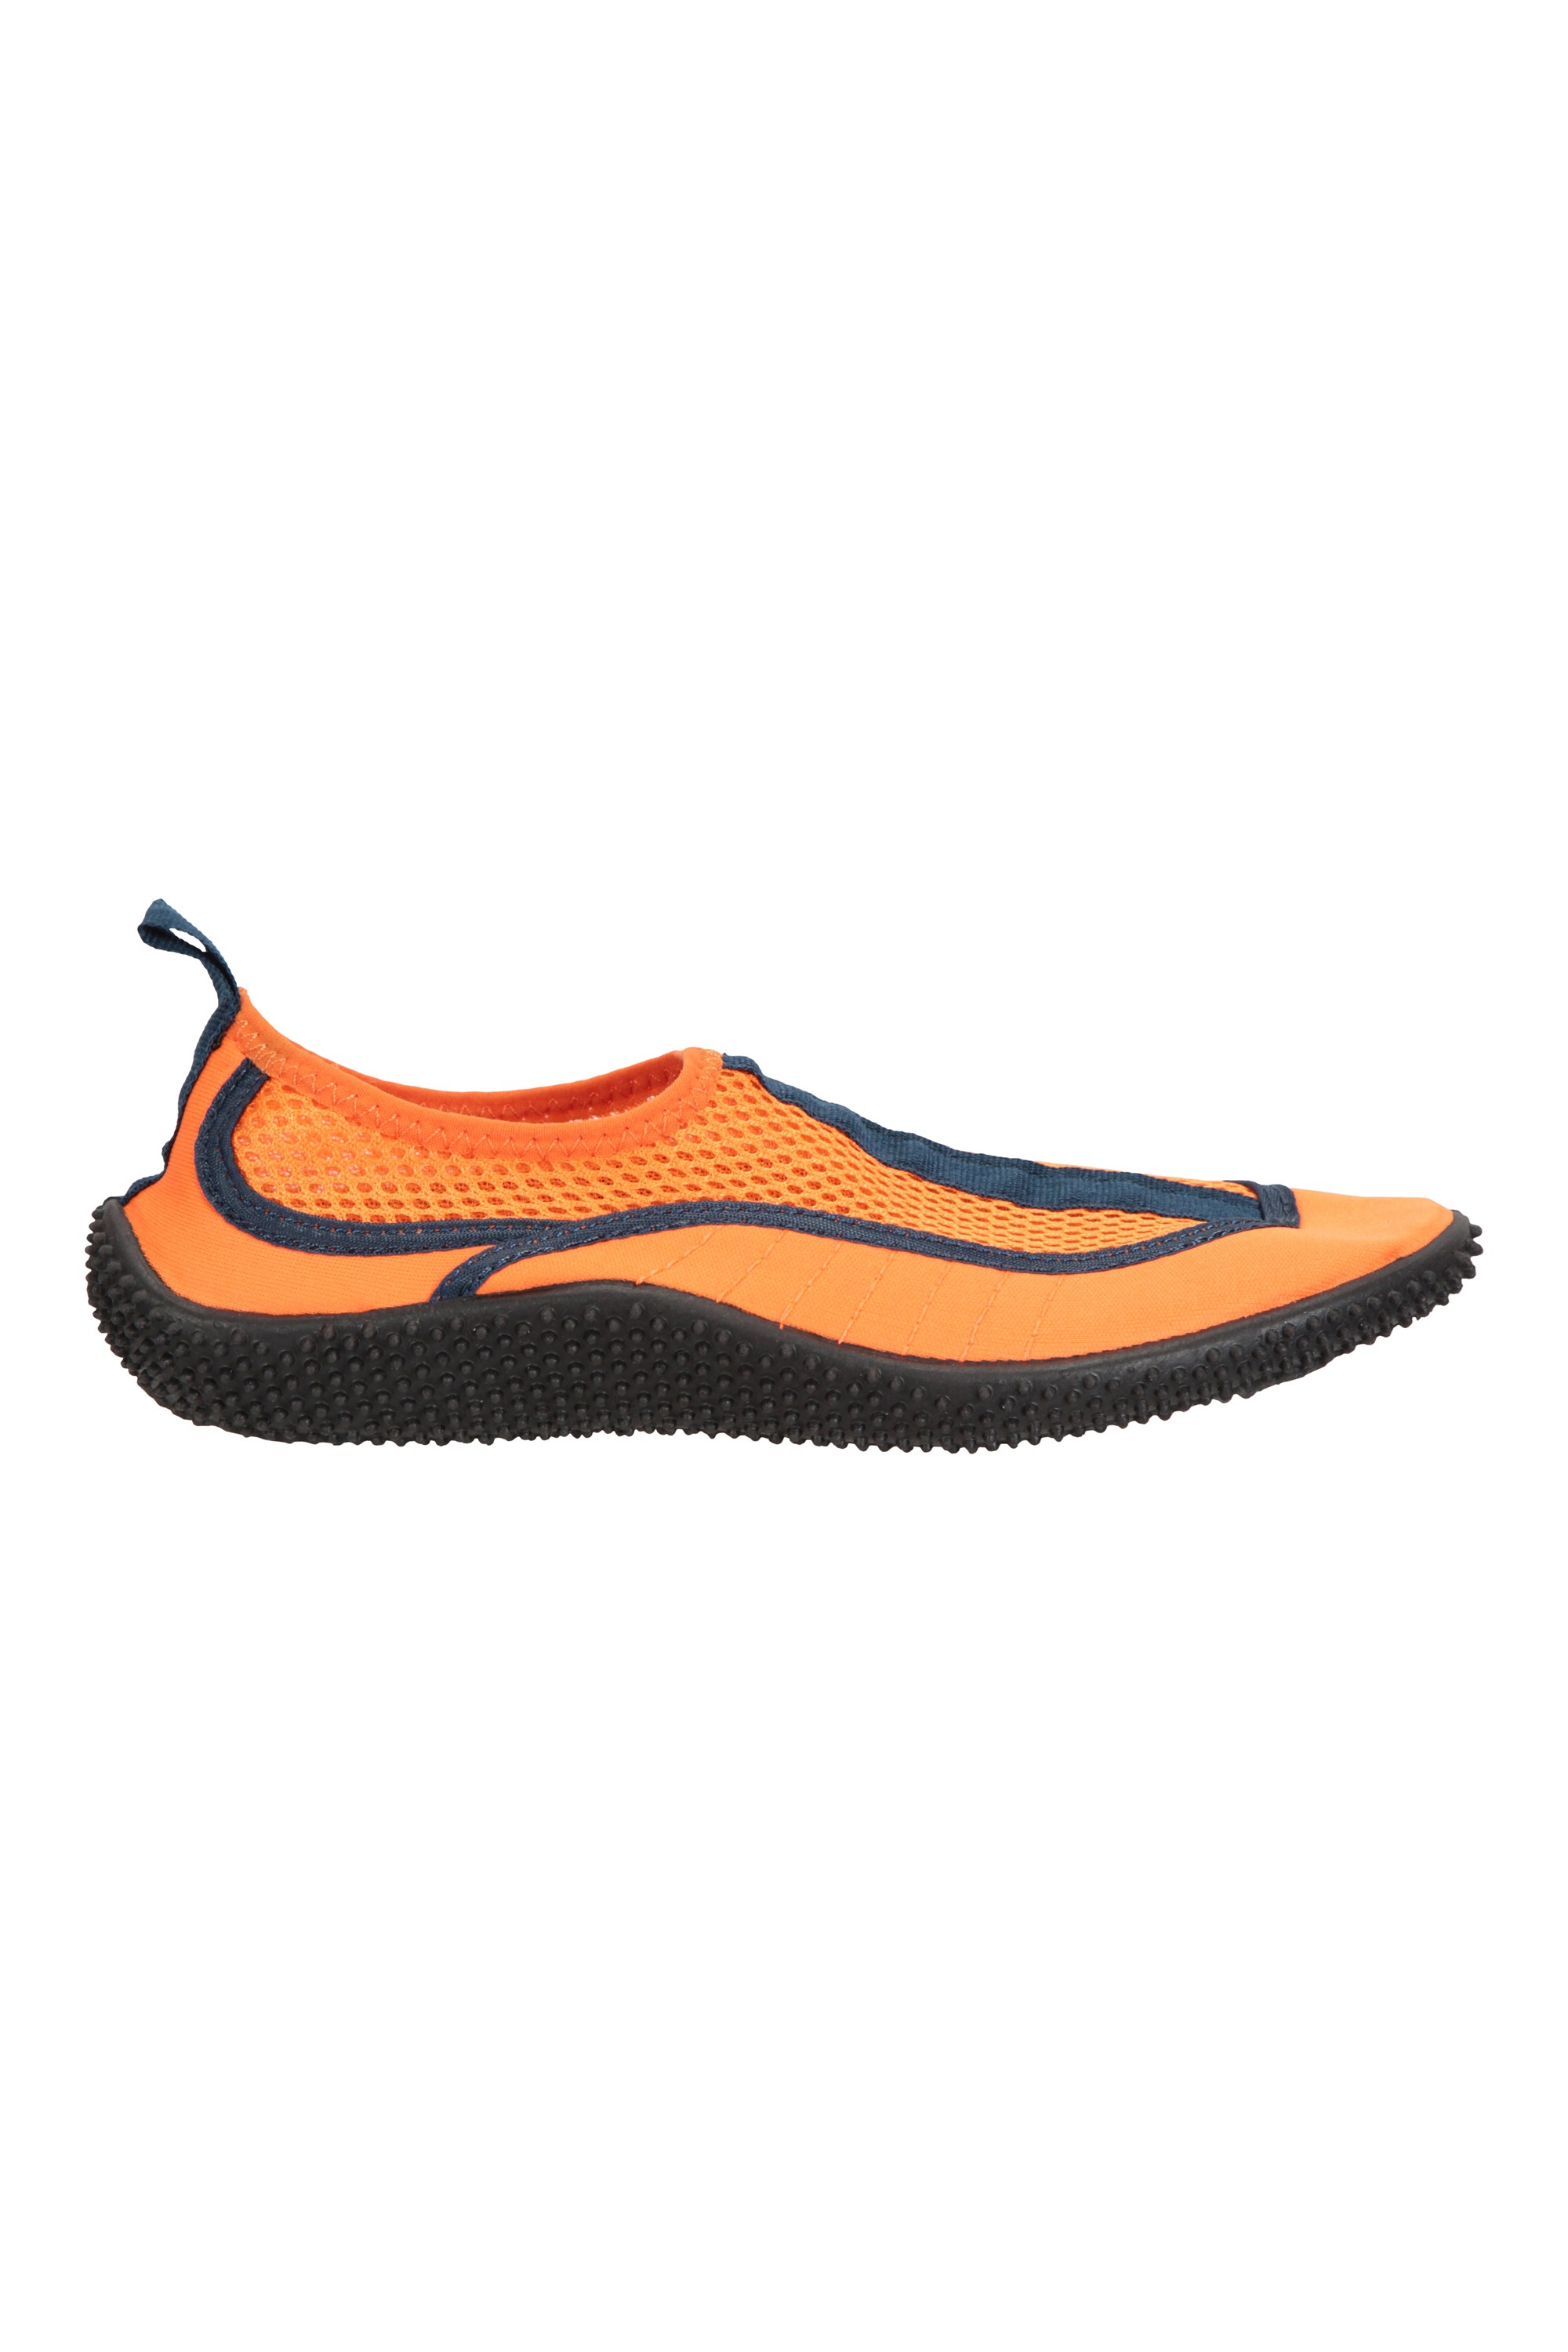 mountain warehouse beach shoes